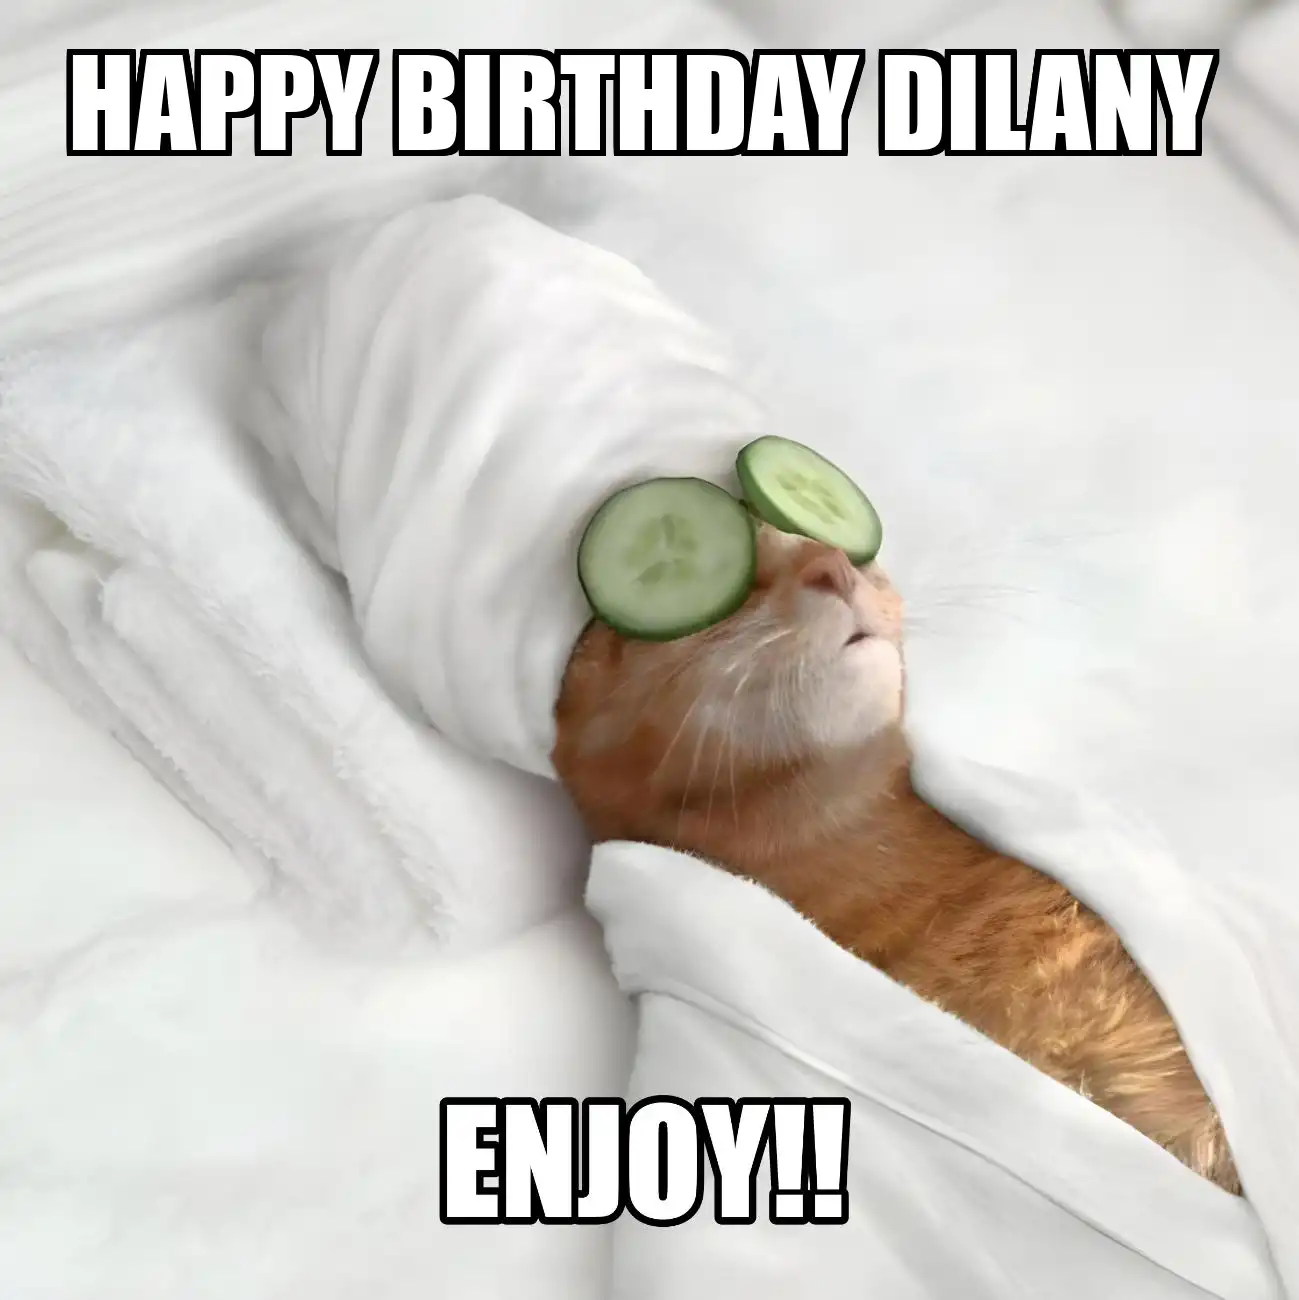 Happy Birthday Dilany Enjoy Cat Meme